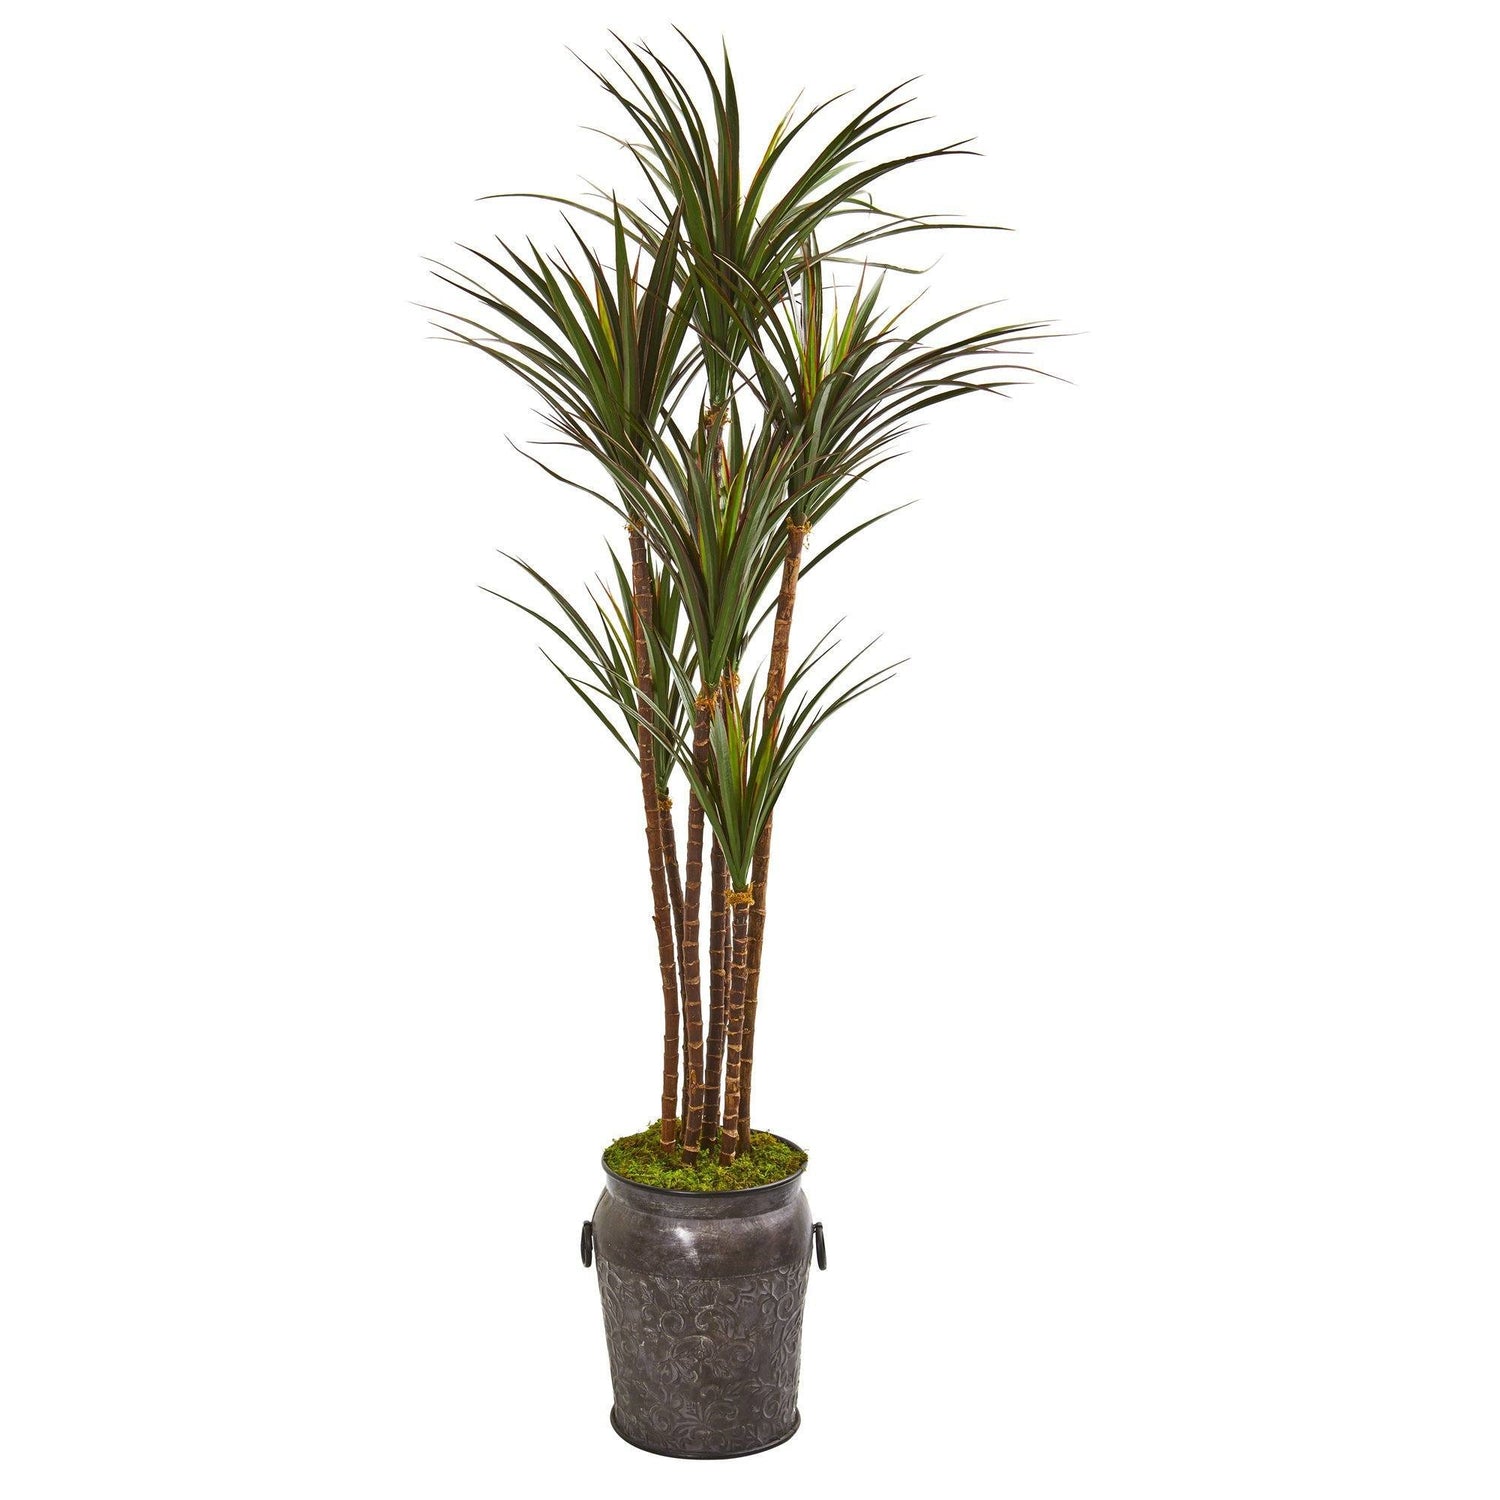 6’ Giant Yucca Artificial Tree in Decorative Planter(Indoor/Outdoor)